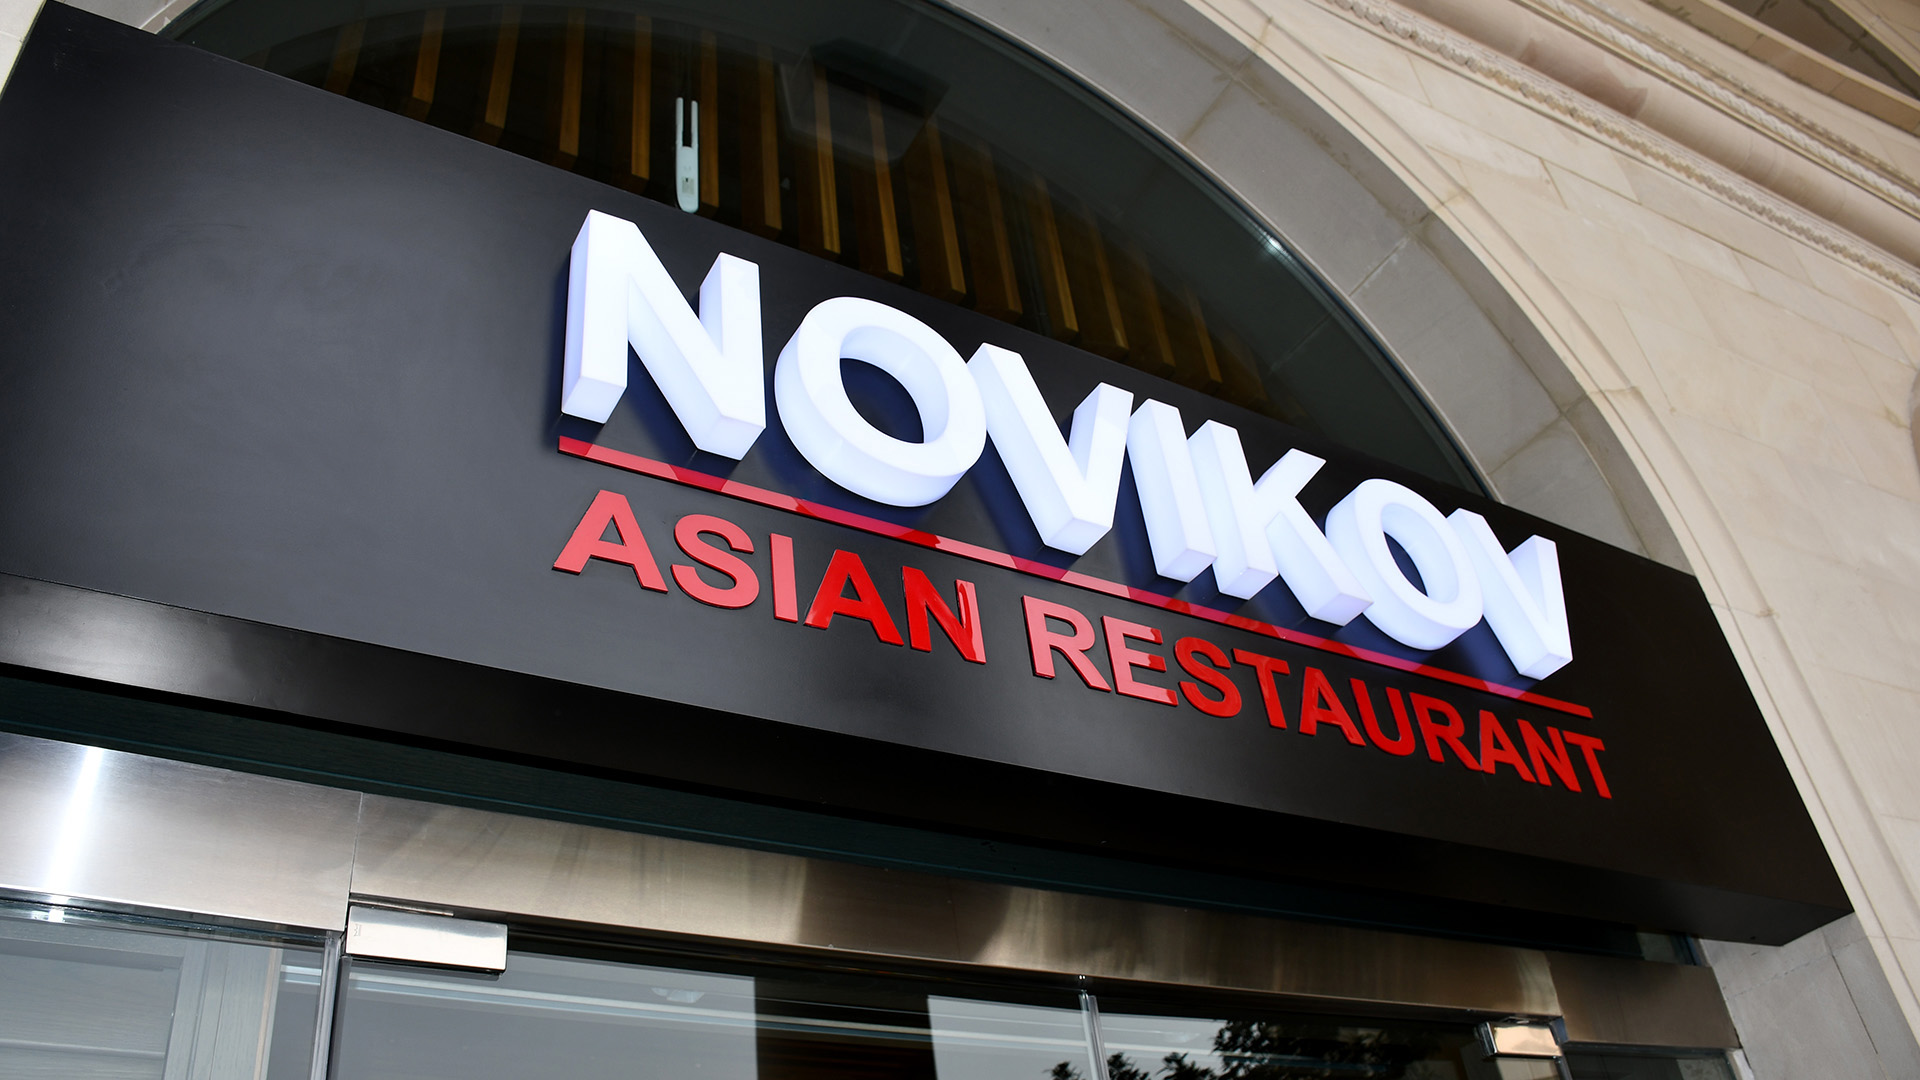 LED Lit Push Through shopfront signage for Novikov Asian Restaurant in Katara, fabricated and installed by ME Visual, Qatar